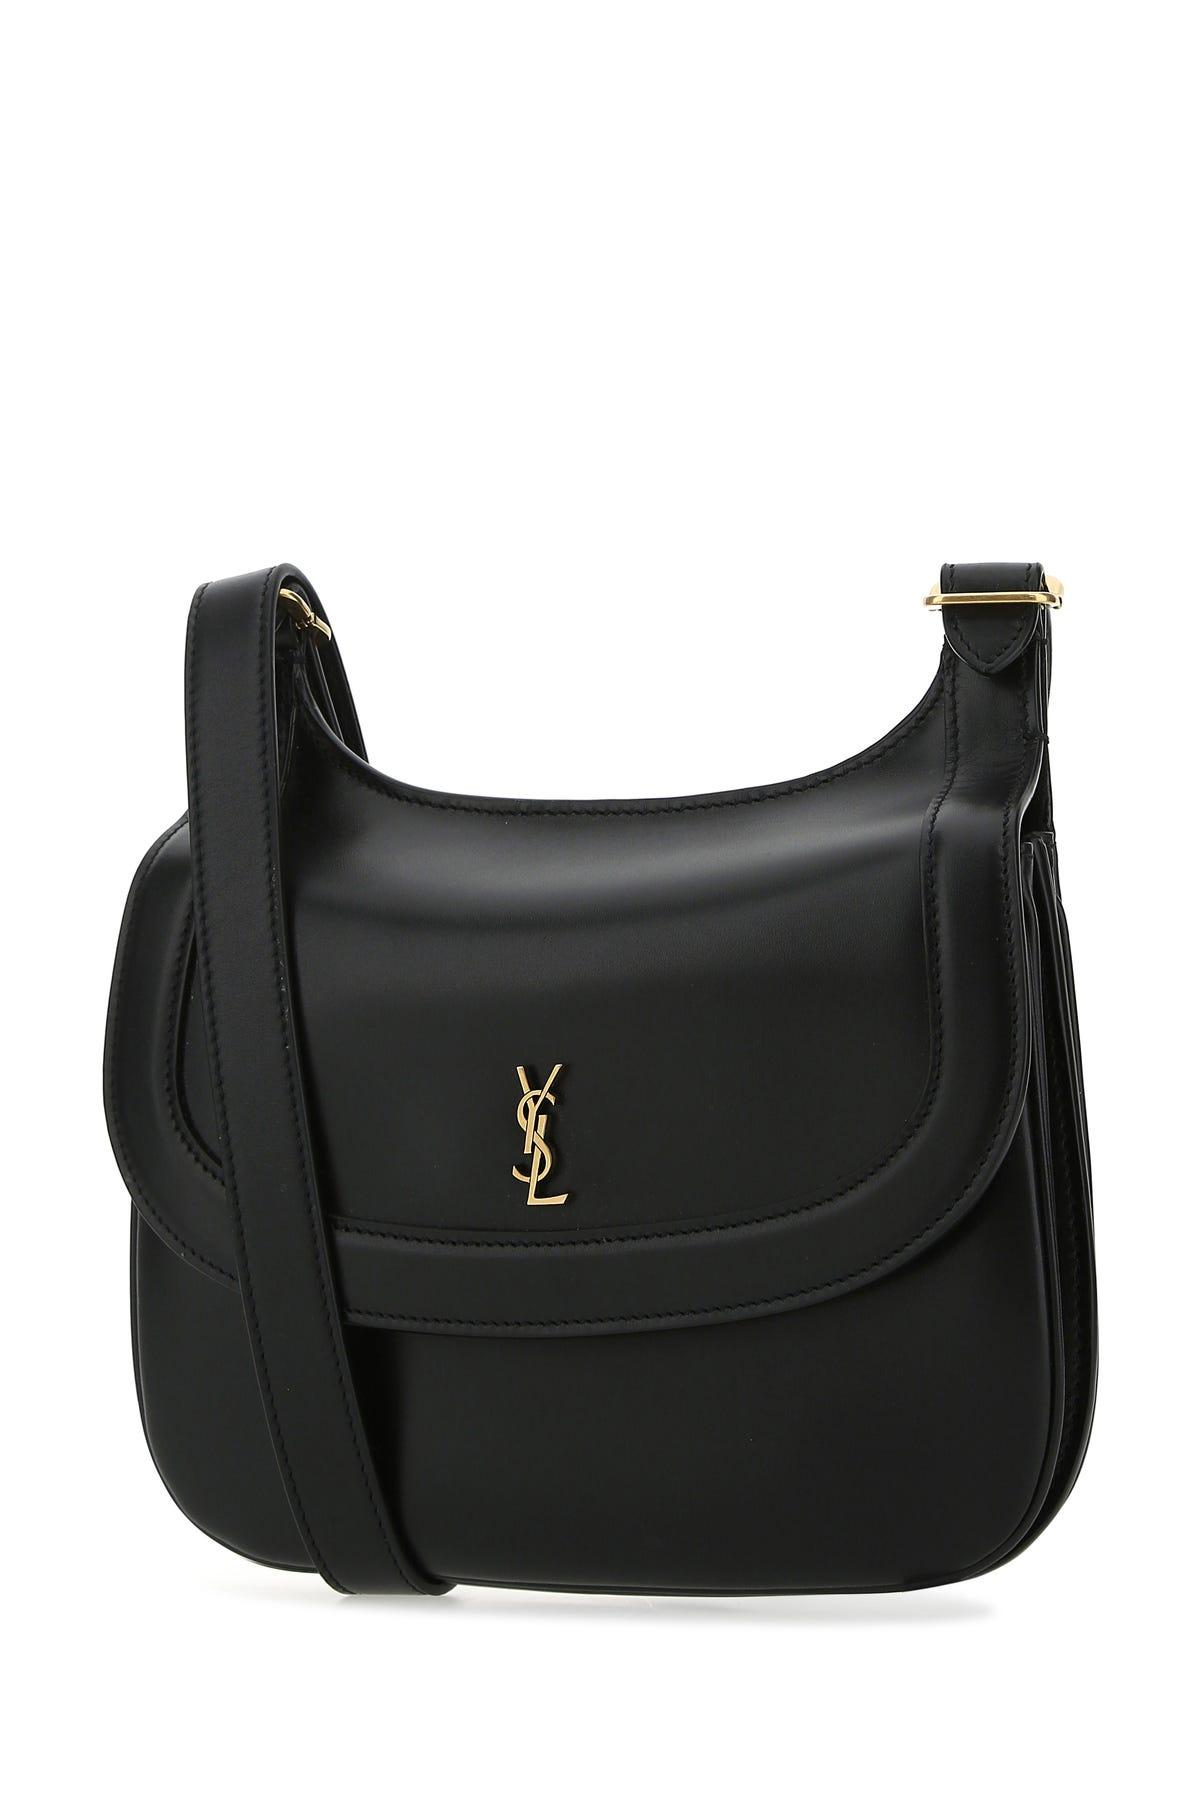 Vintage YSL Yves Saint Laurent Bucket Bag | eBay